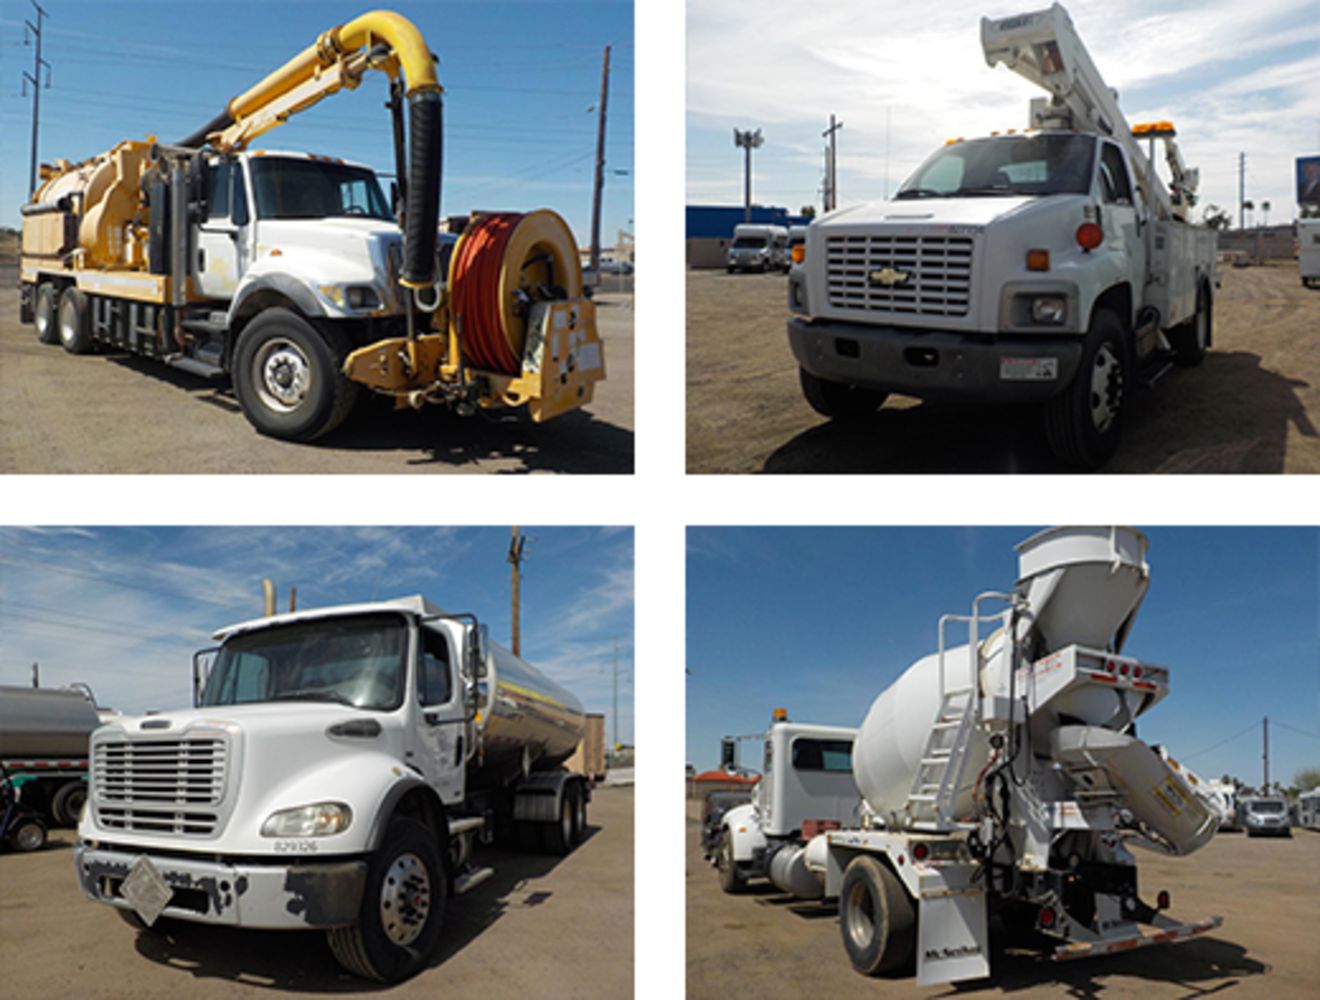 Heavy Equipment and Fleet Vehicles - Phoenix, AZ